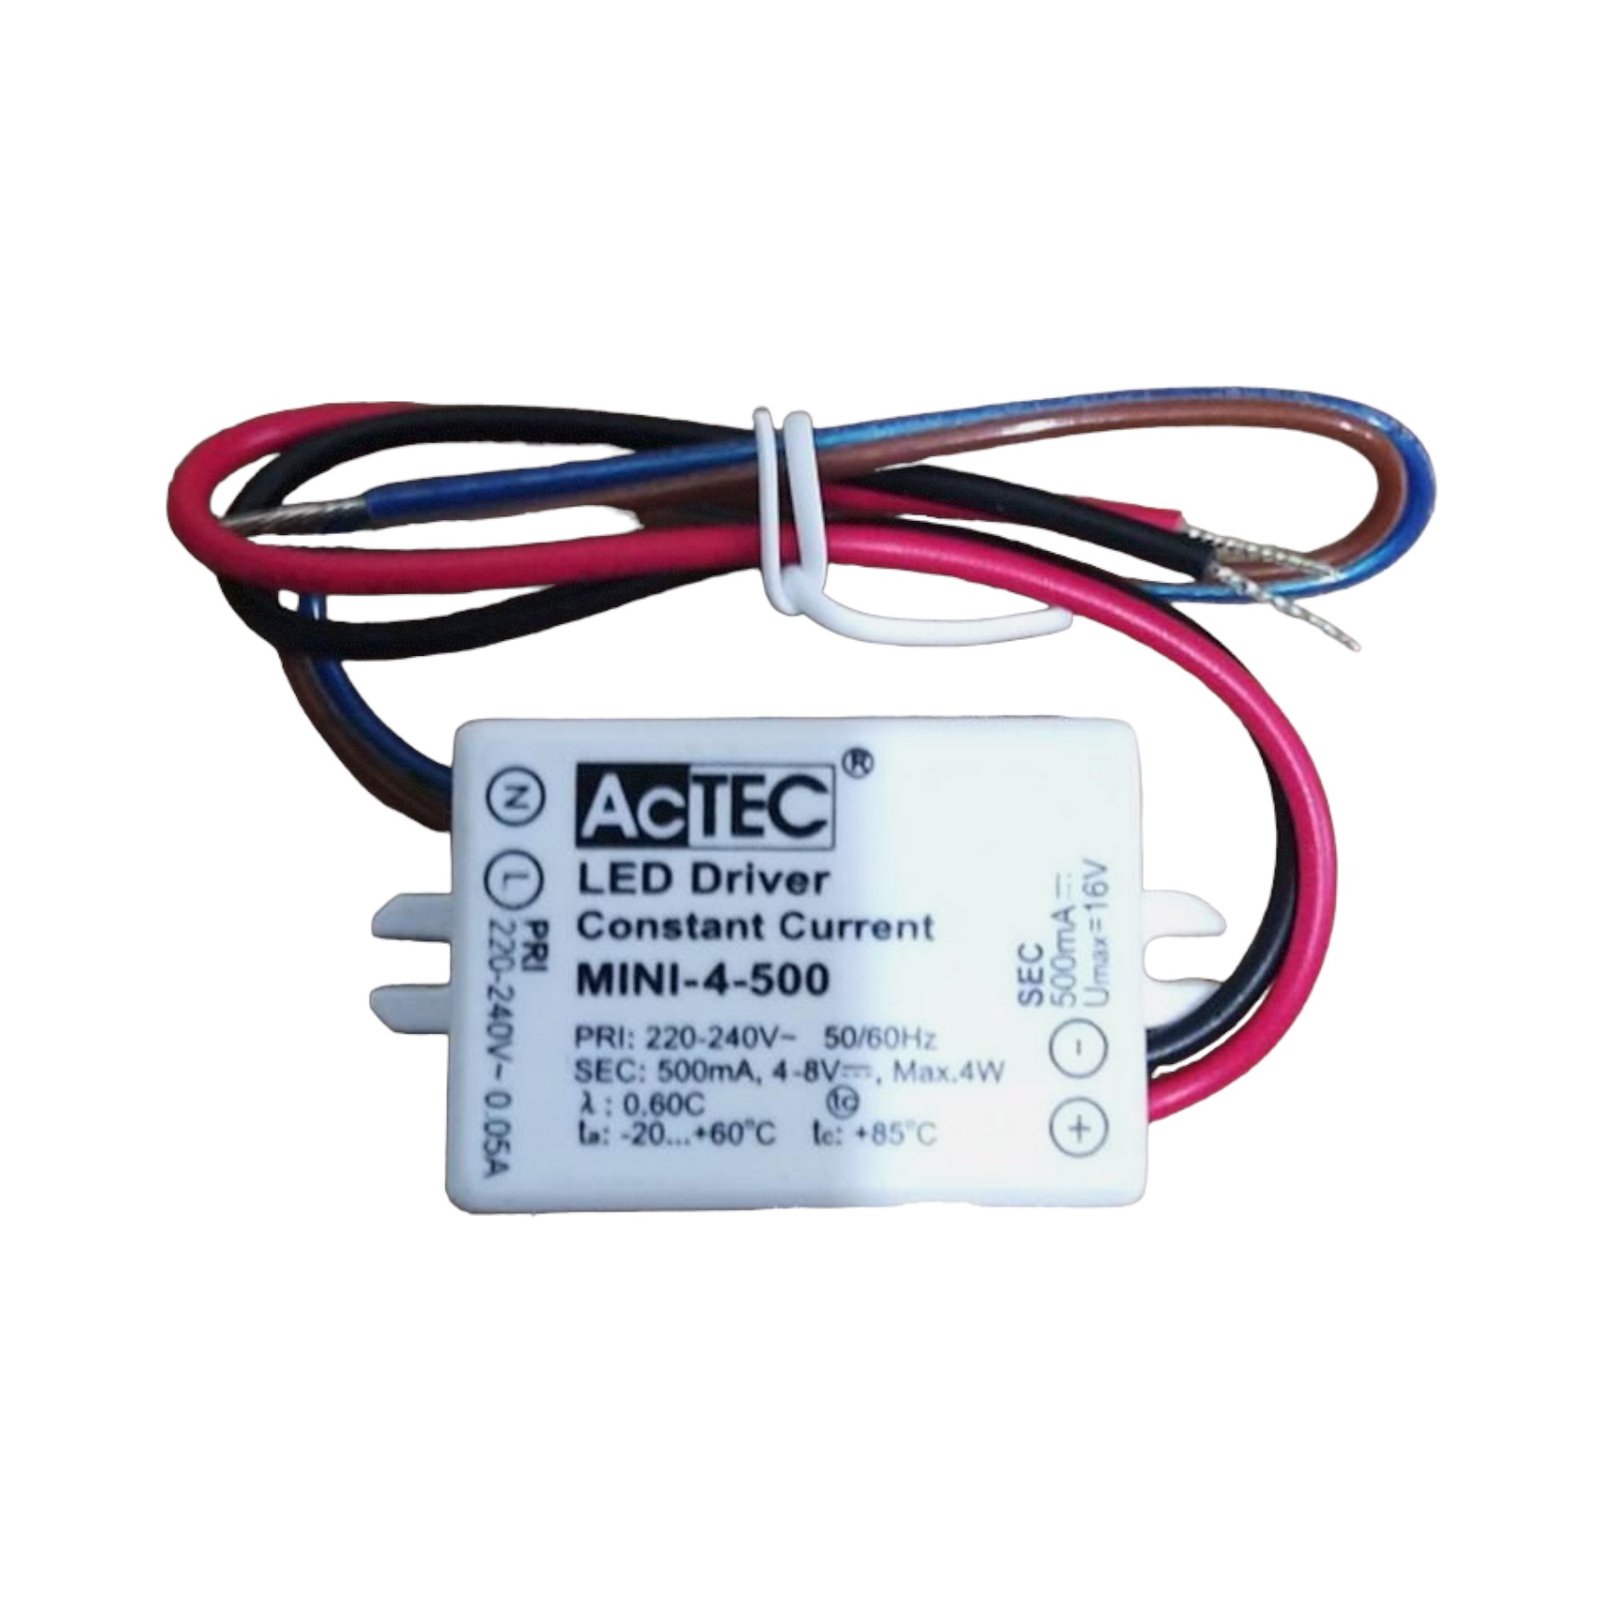 AcTEC Mini LED driver CC 500 mA, 4W, IP65